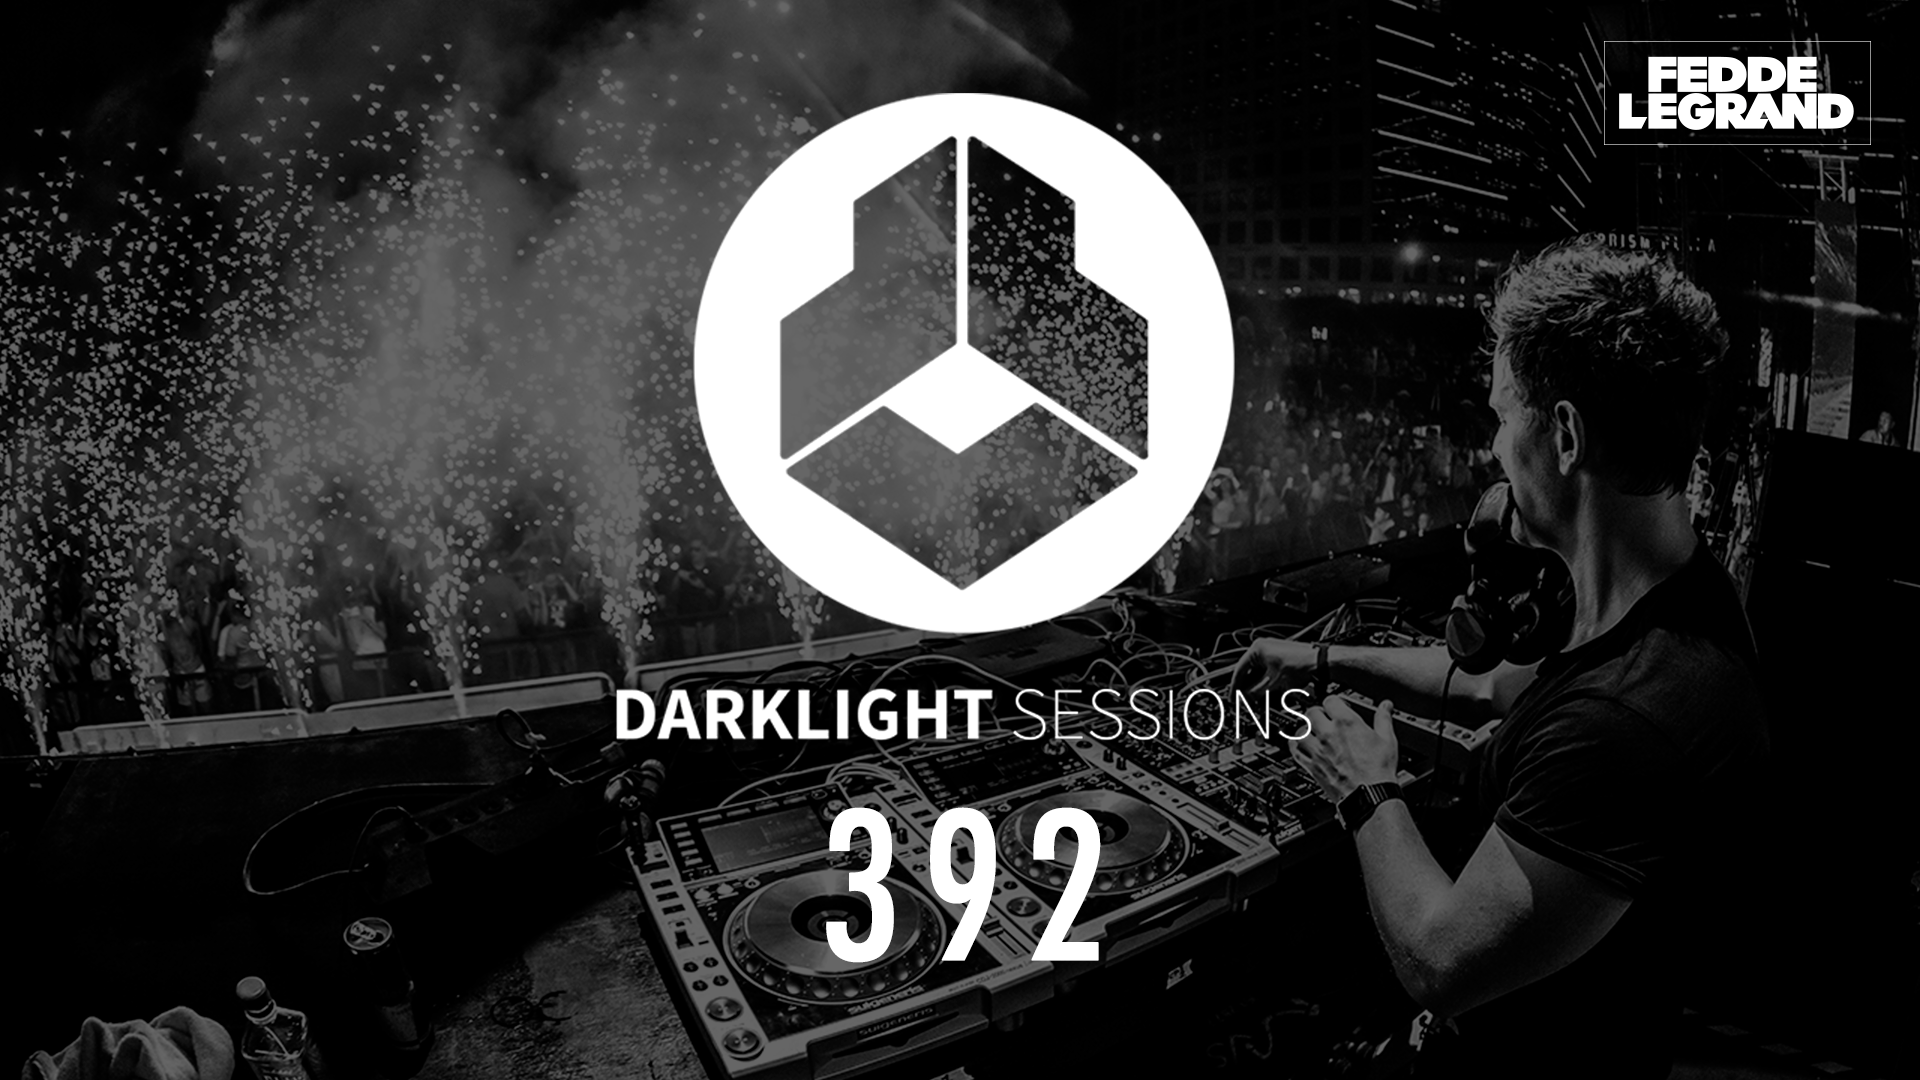 Darklight Sessions 392